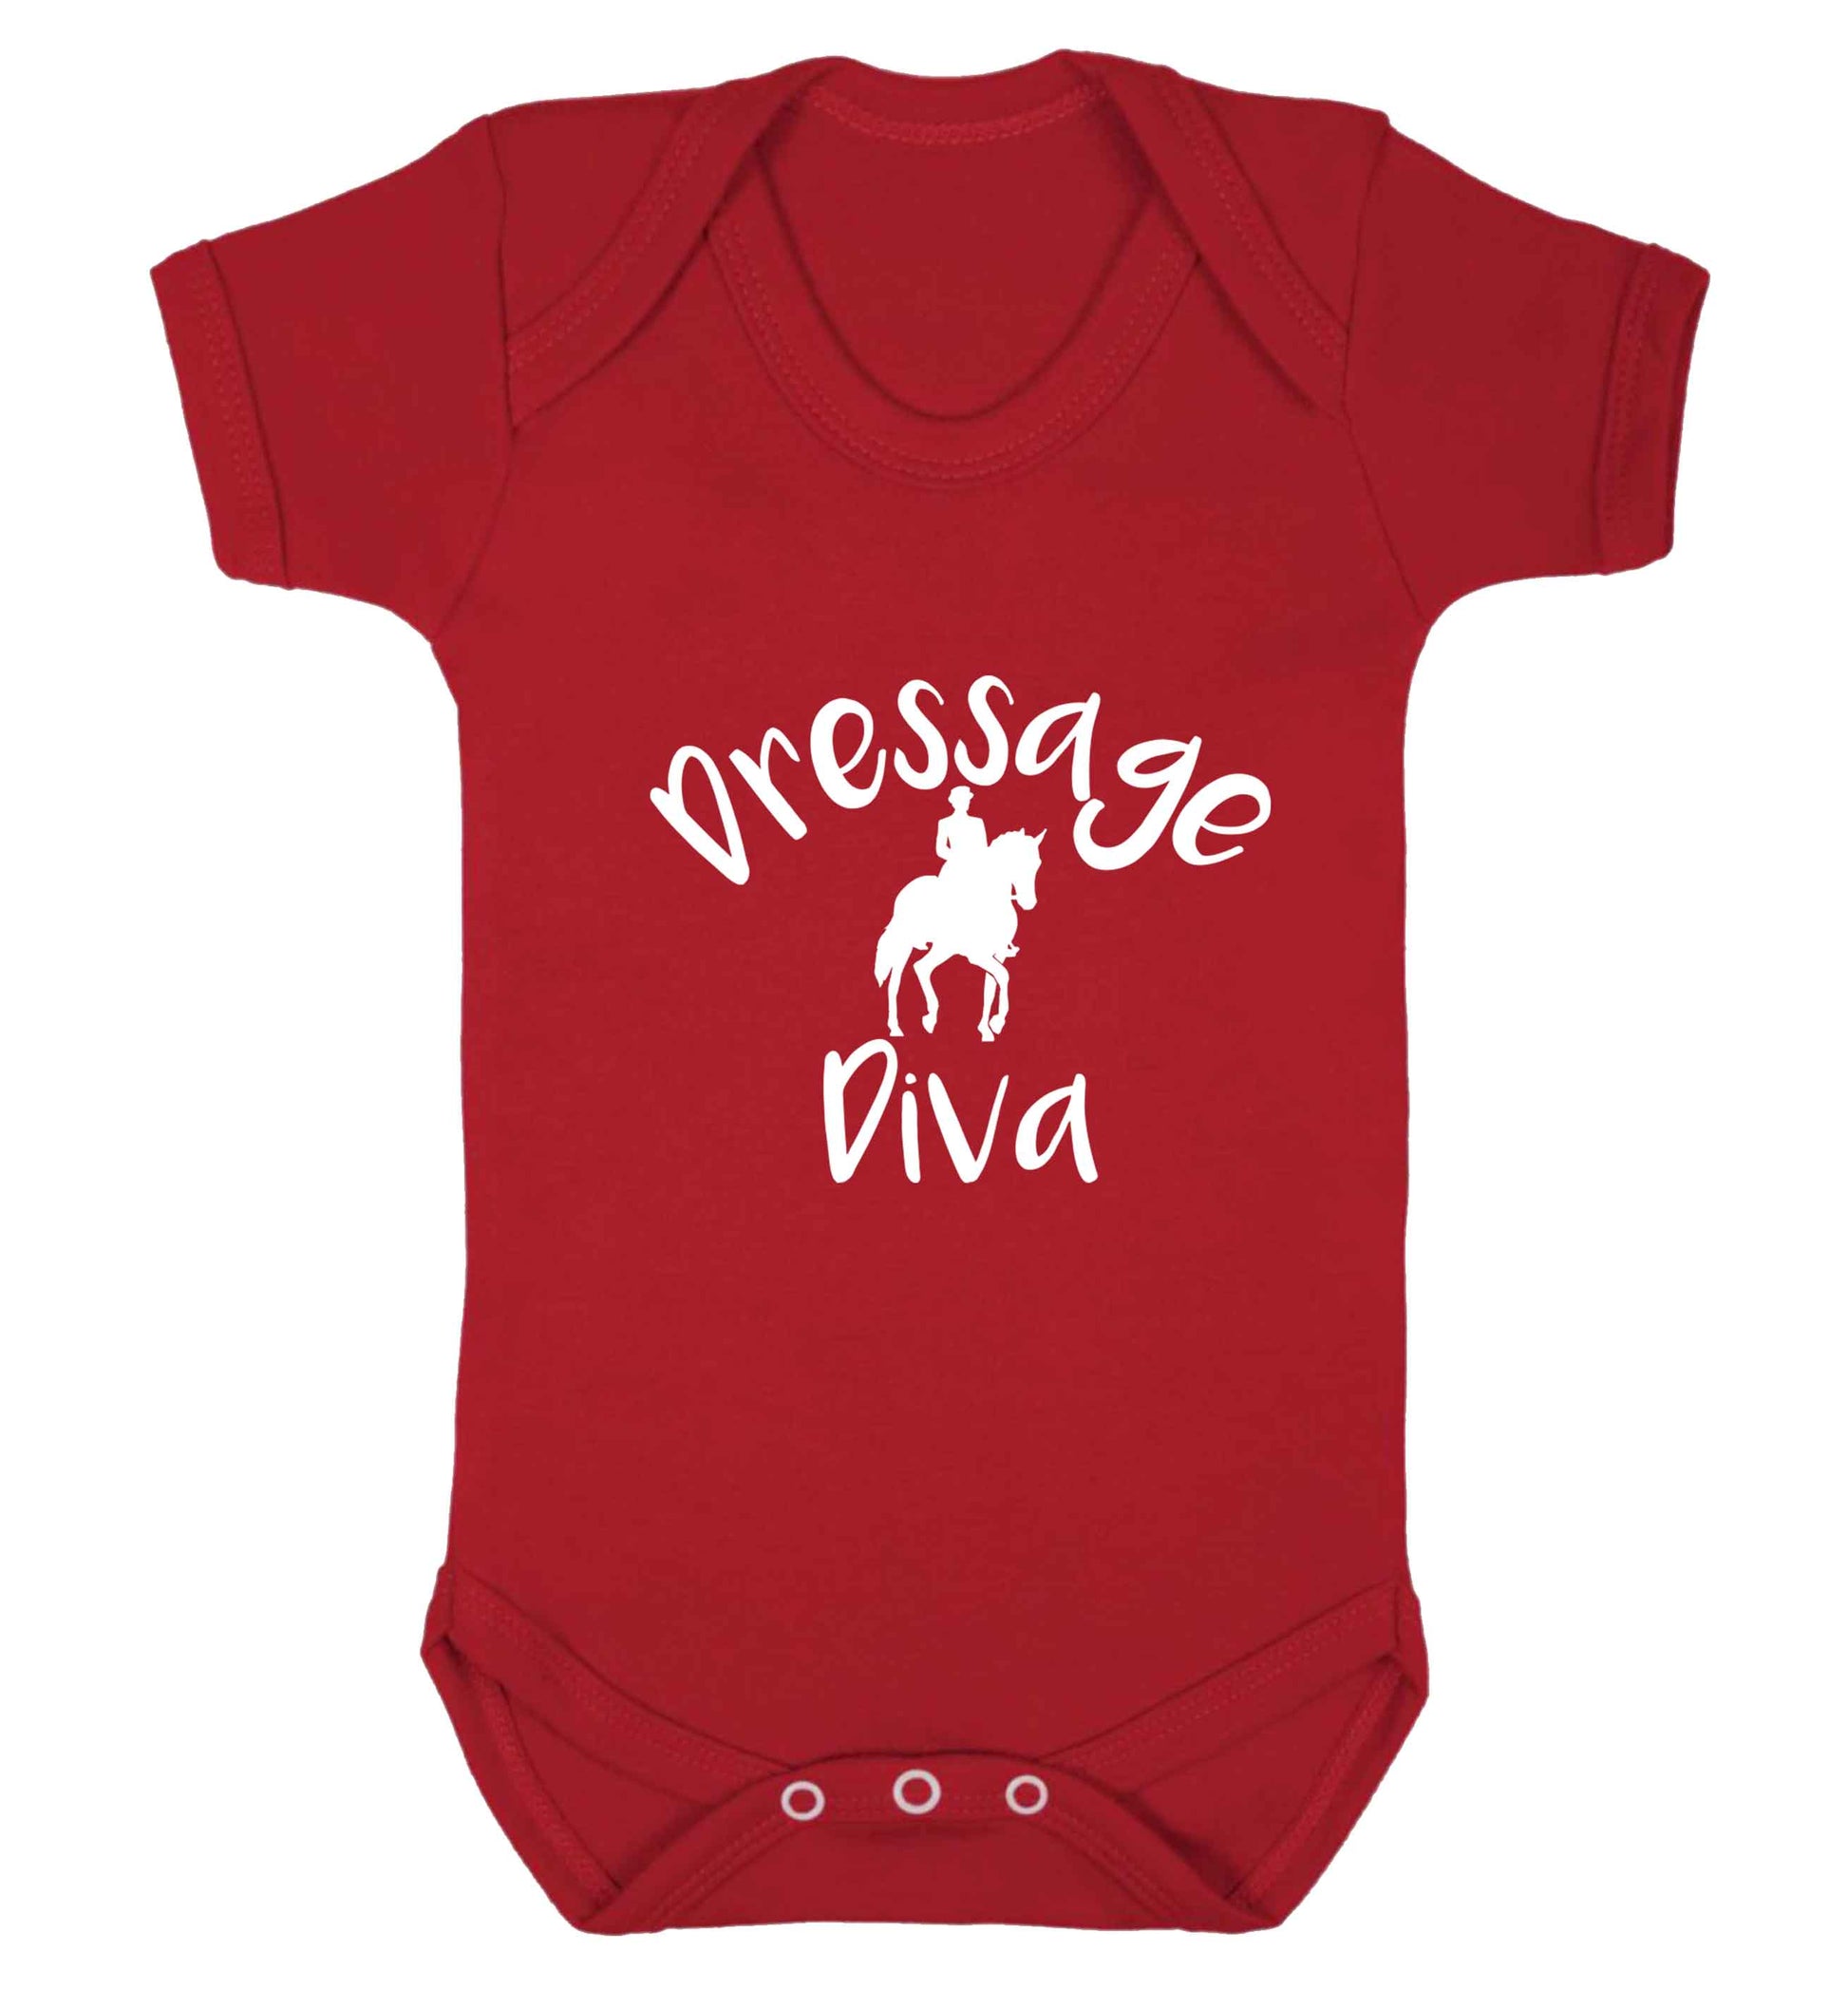 Dressage diva baby vest red 18-24 months